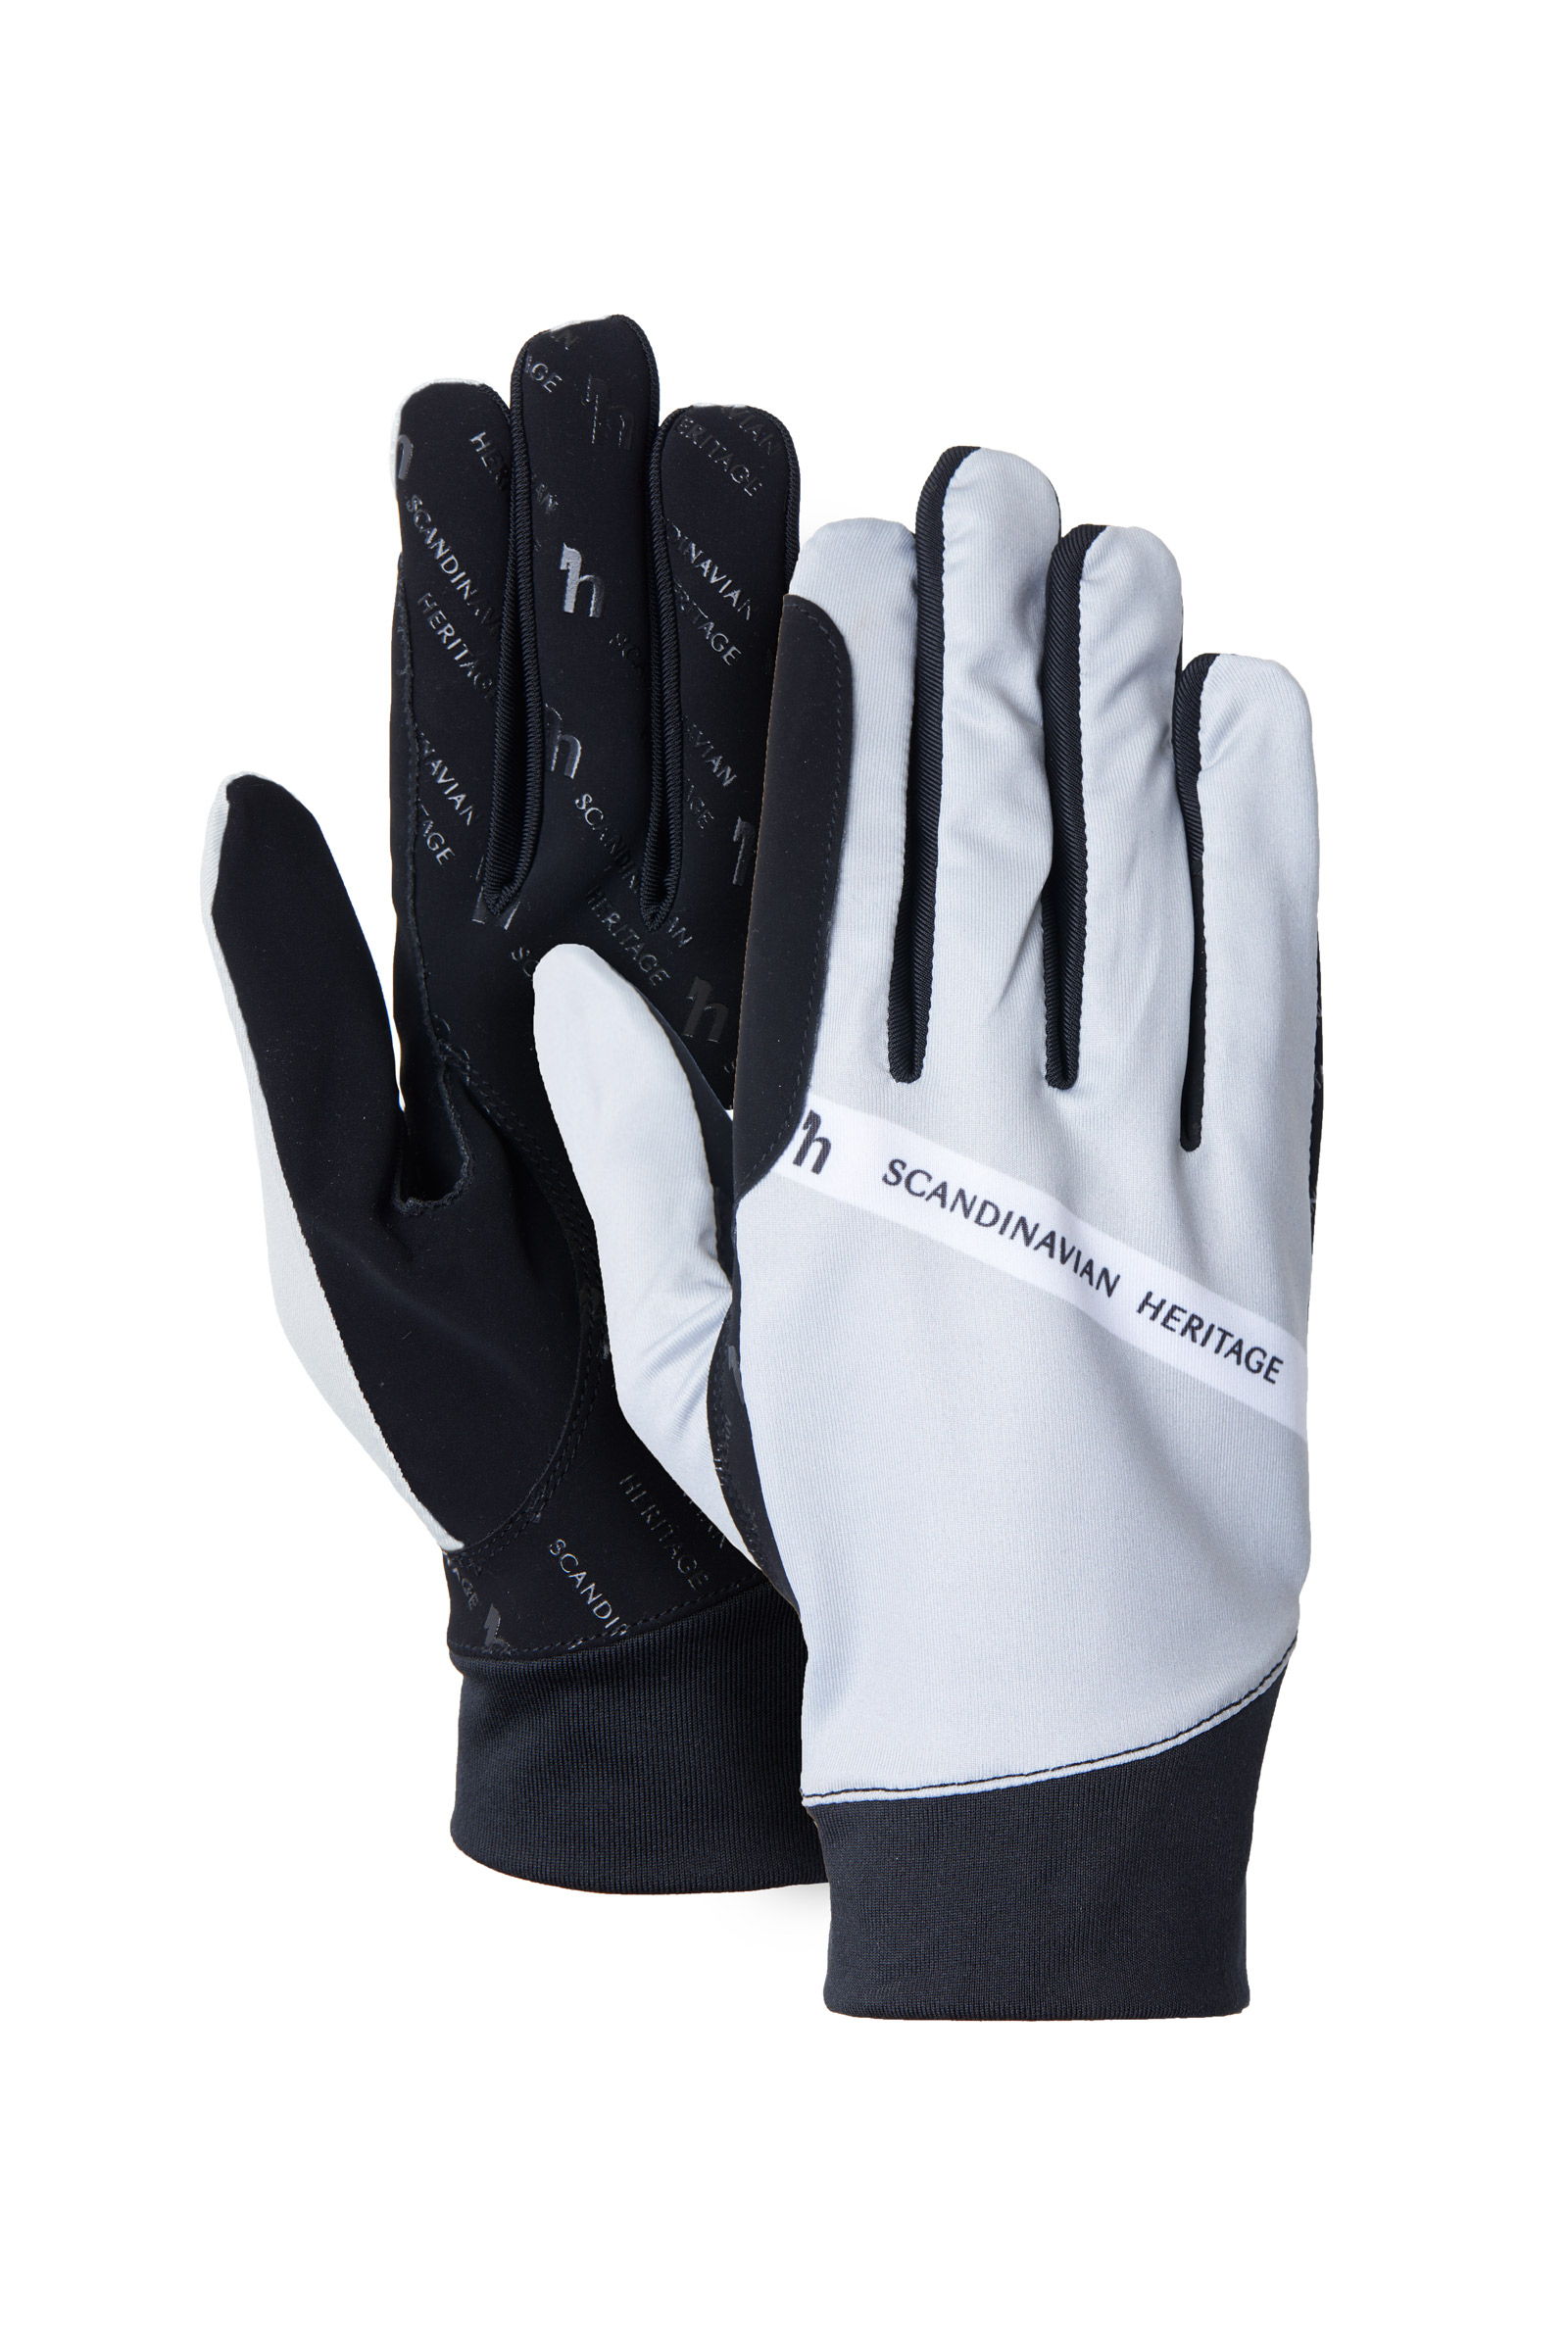 Buy Horze Gabriela Women's Stretch Riding Gloves with UV